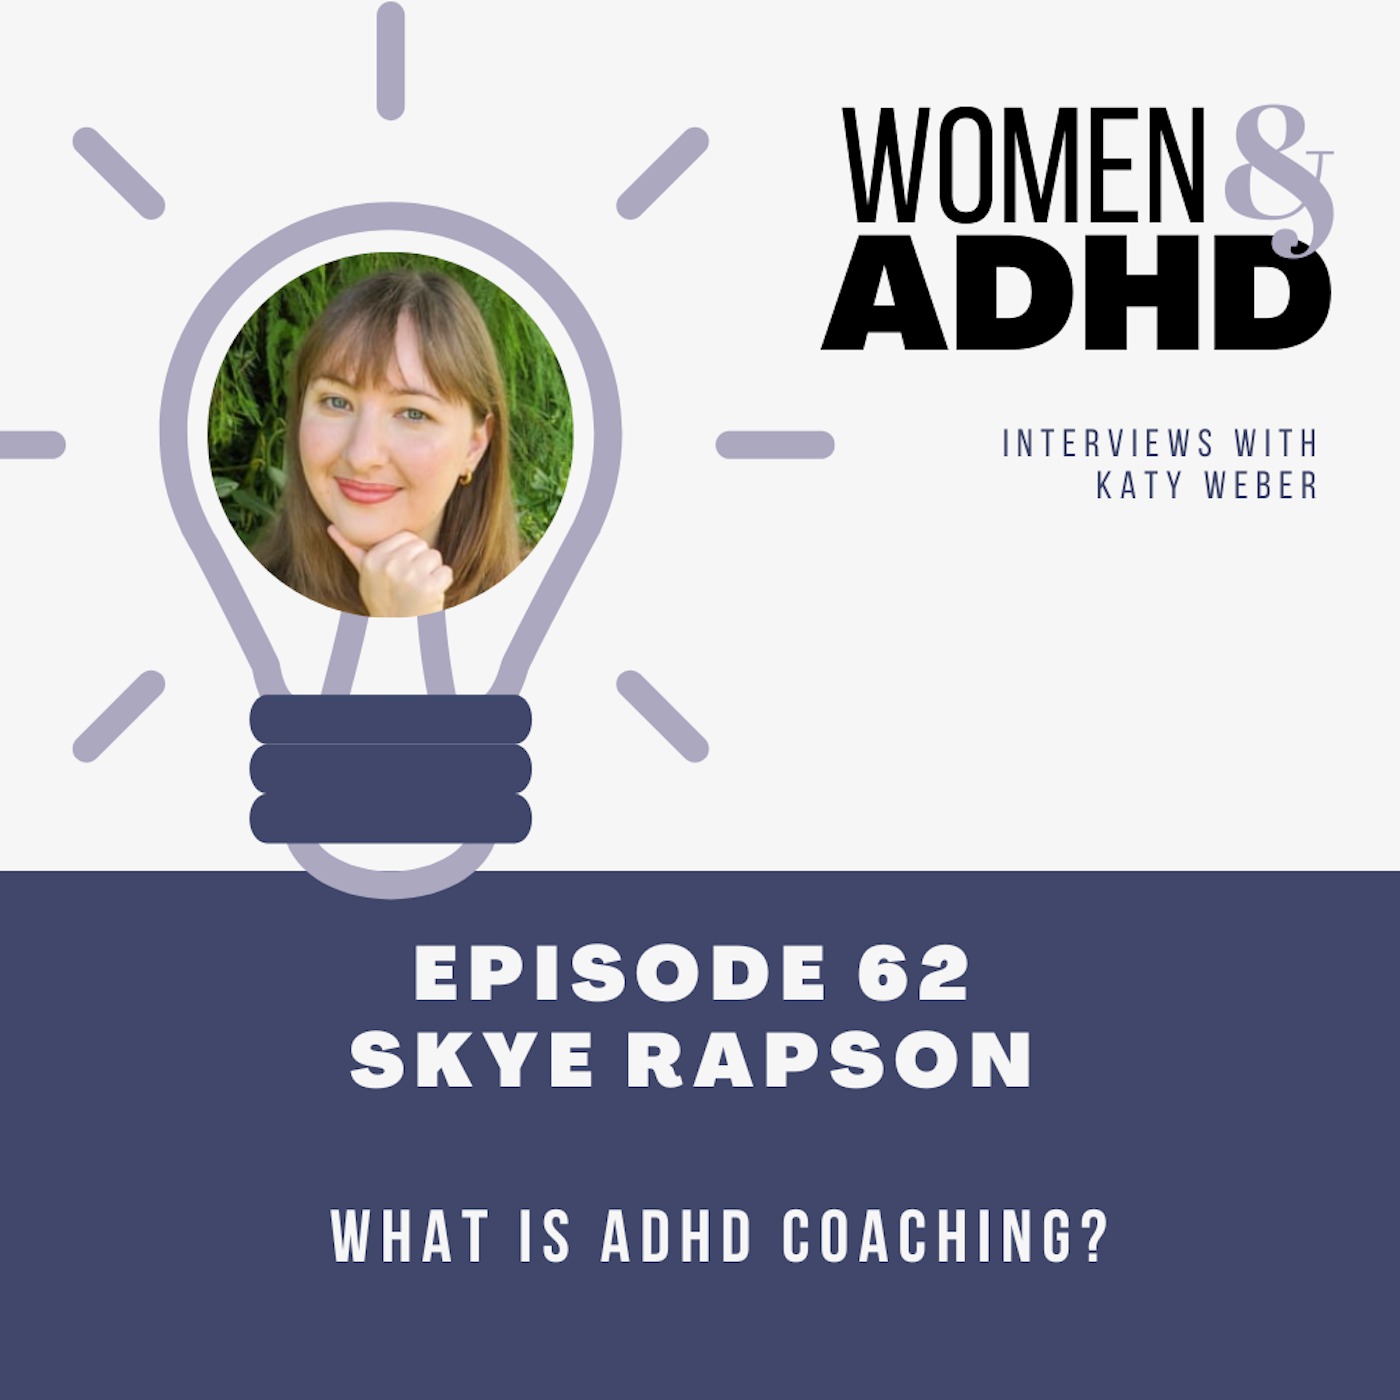 Skye Rapson: What is ADHD coaching?